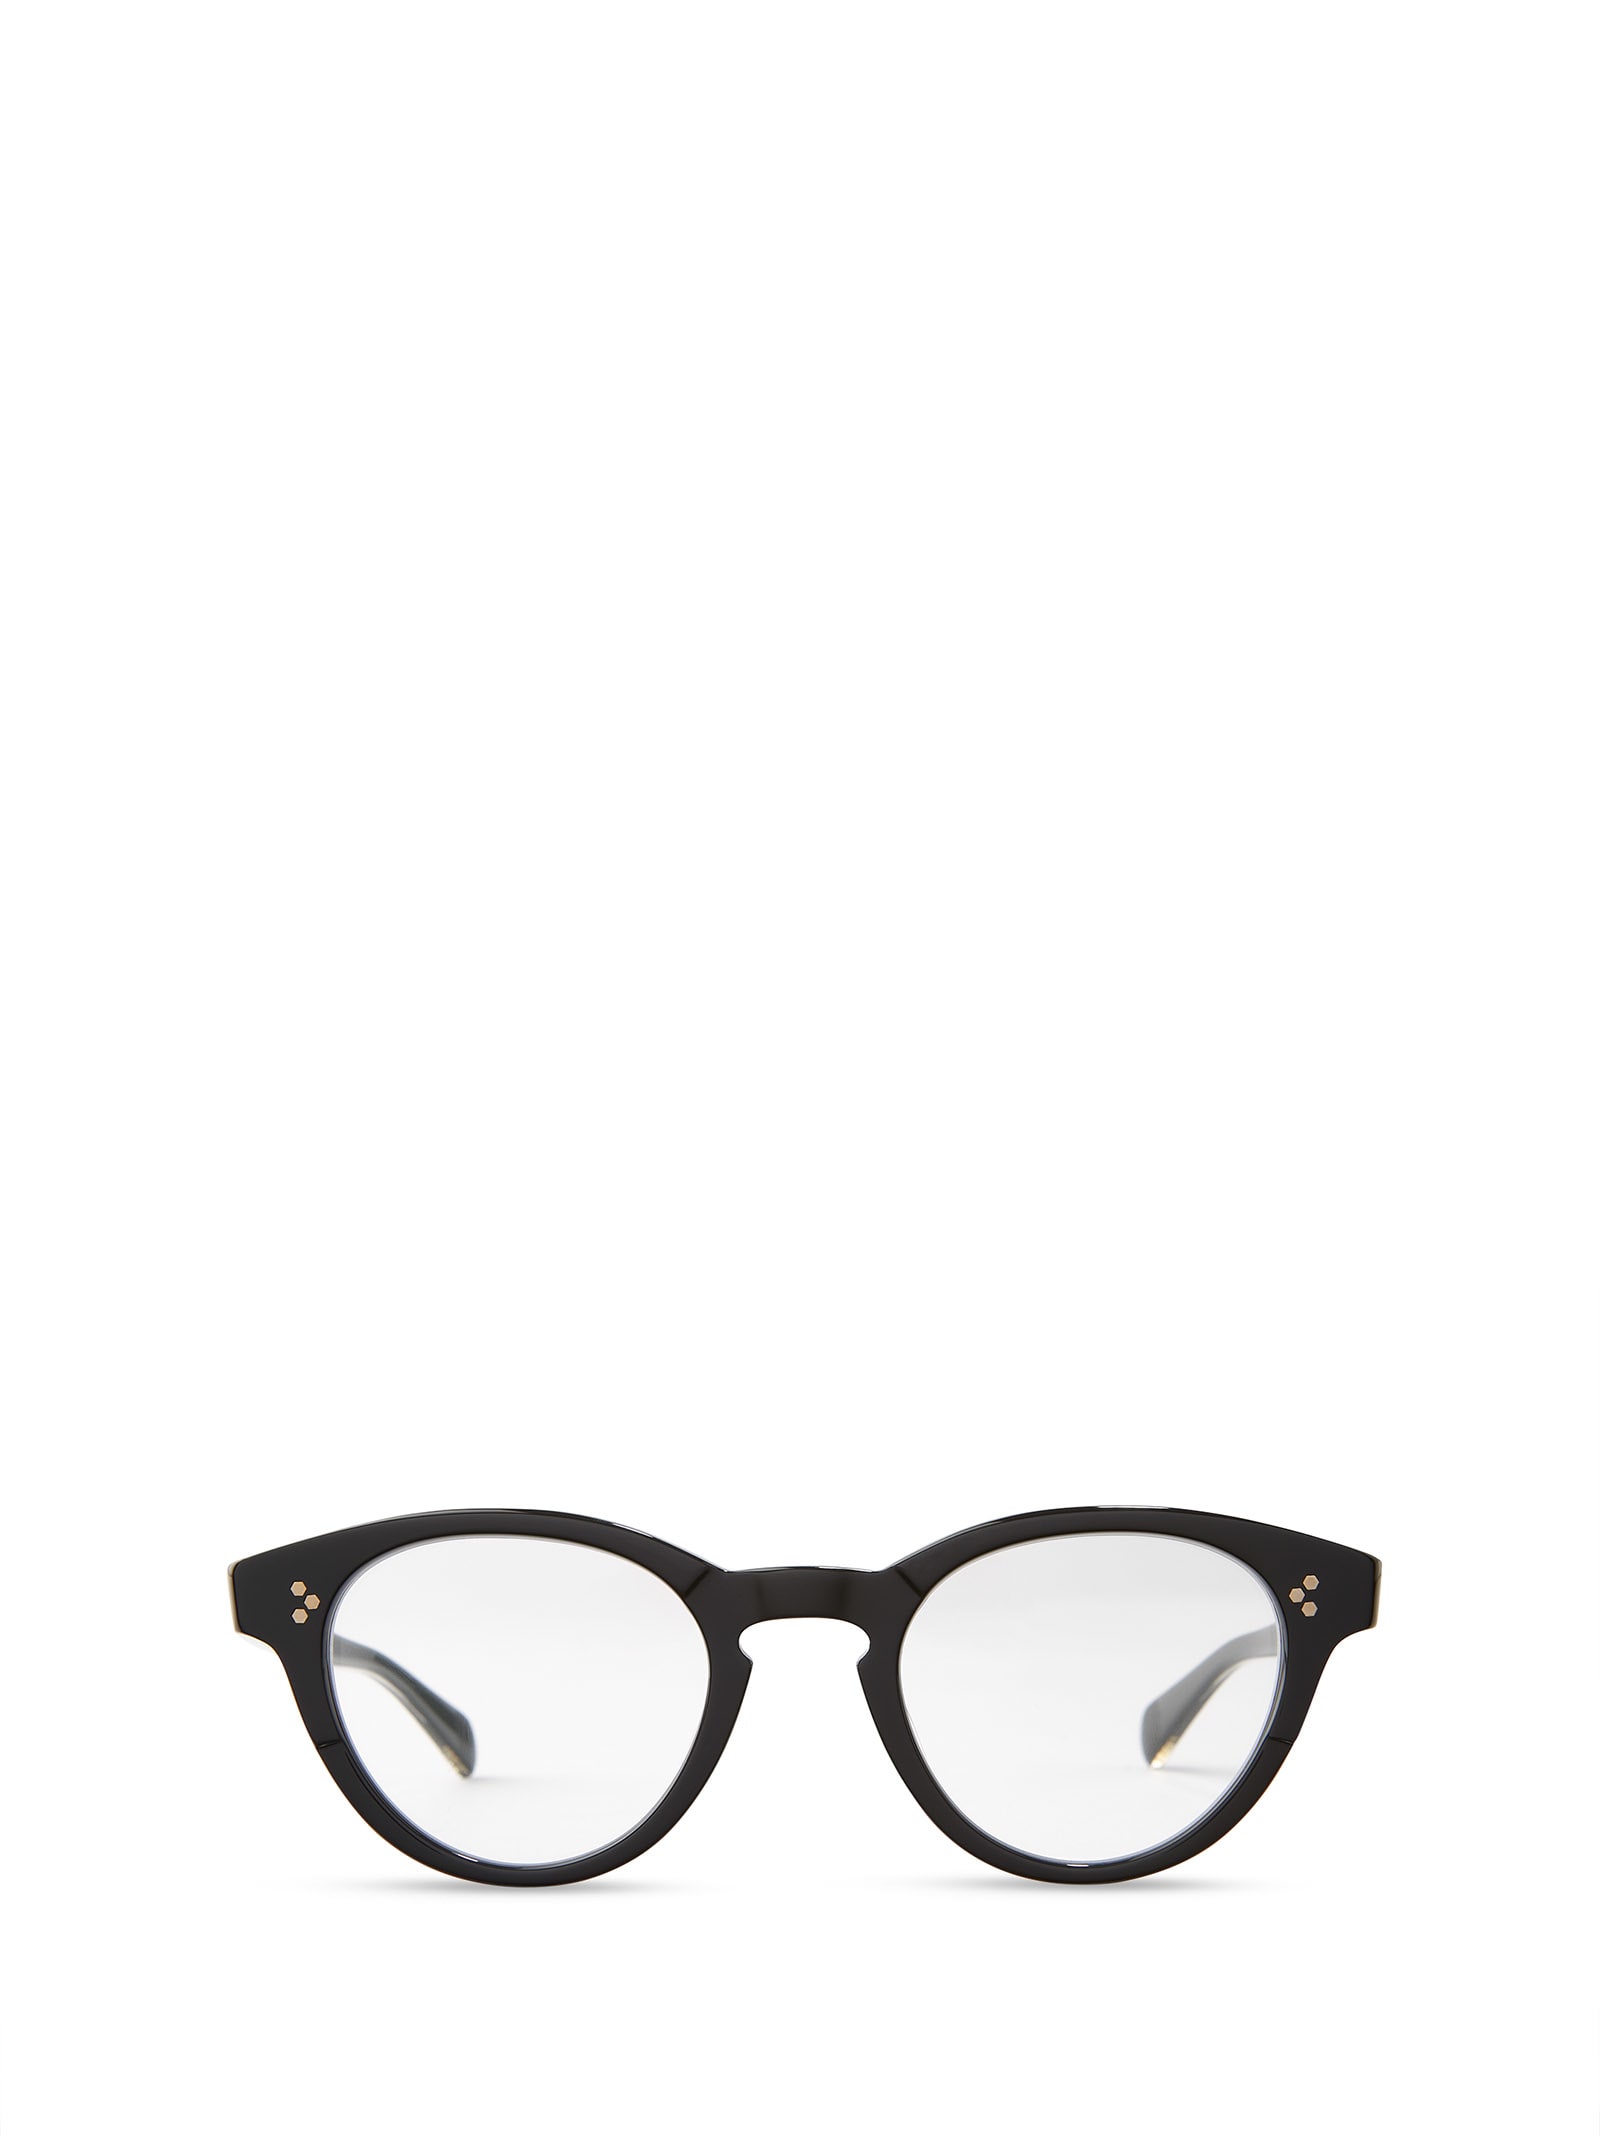 Audrey C Black-12k White Gold Glasses